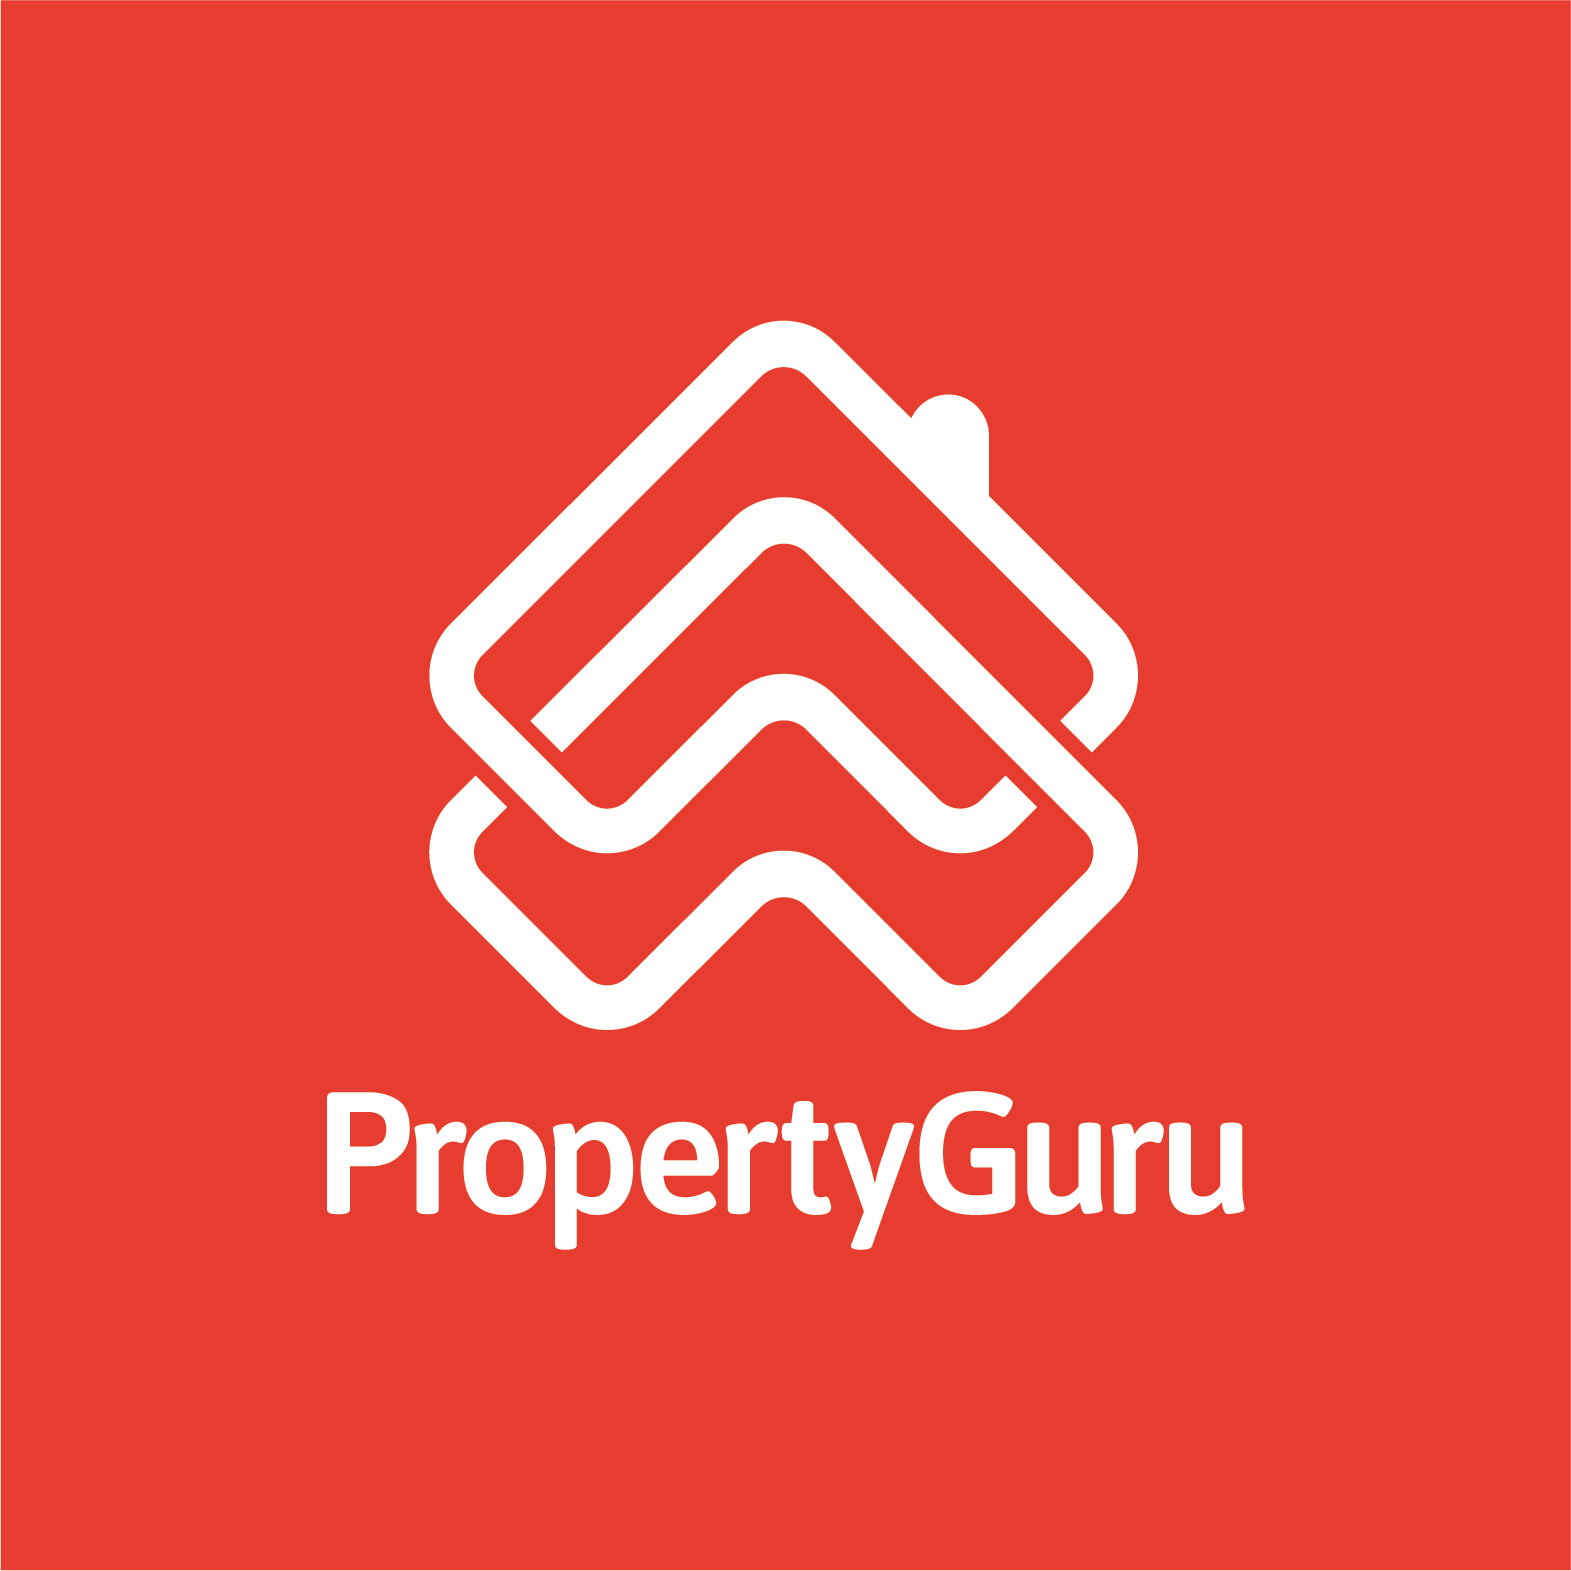 Propertyguru Pte. Ltd. company logo